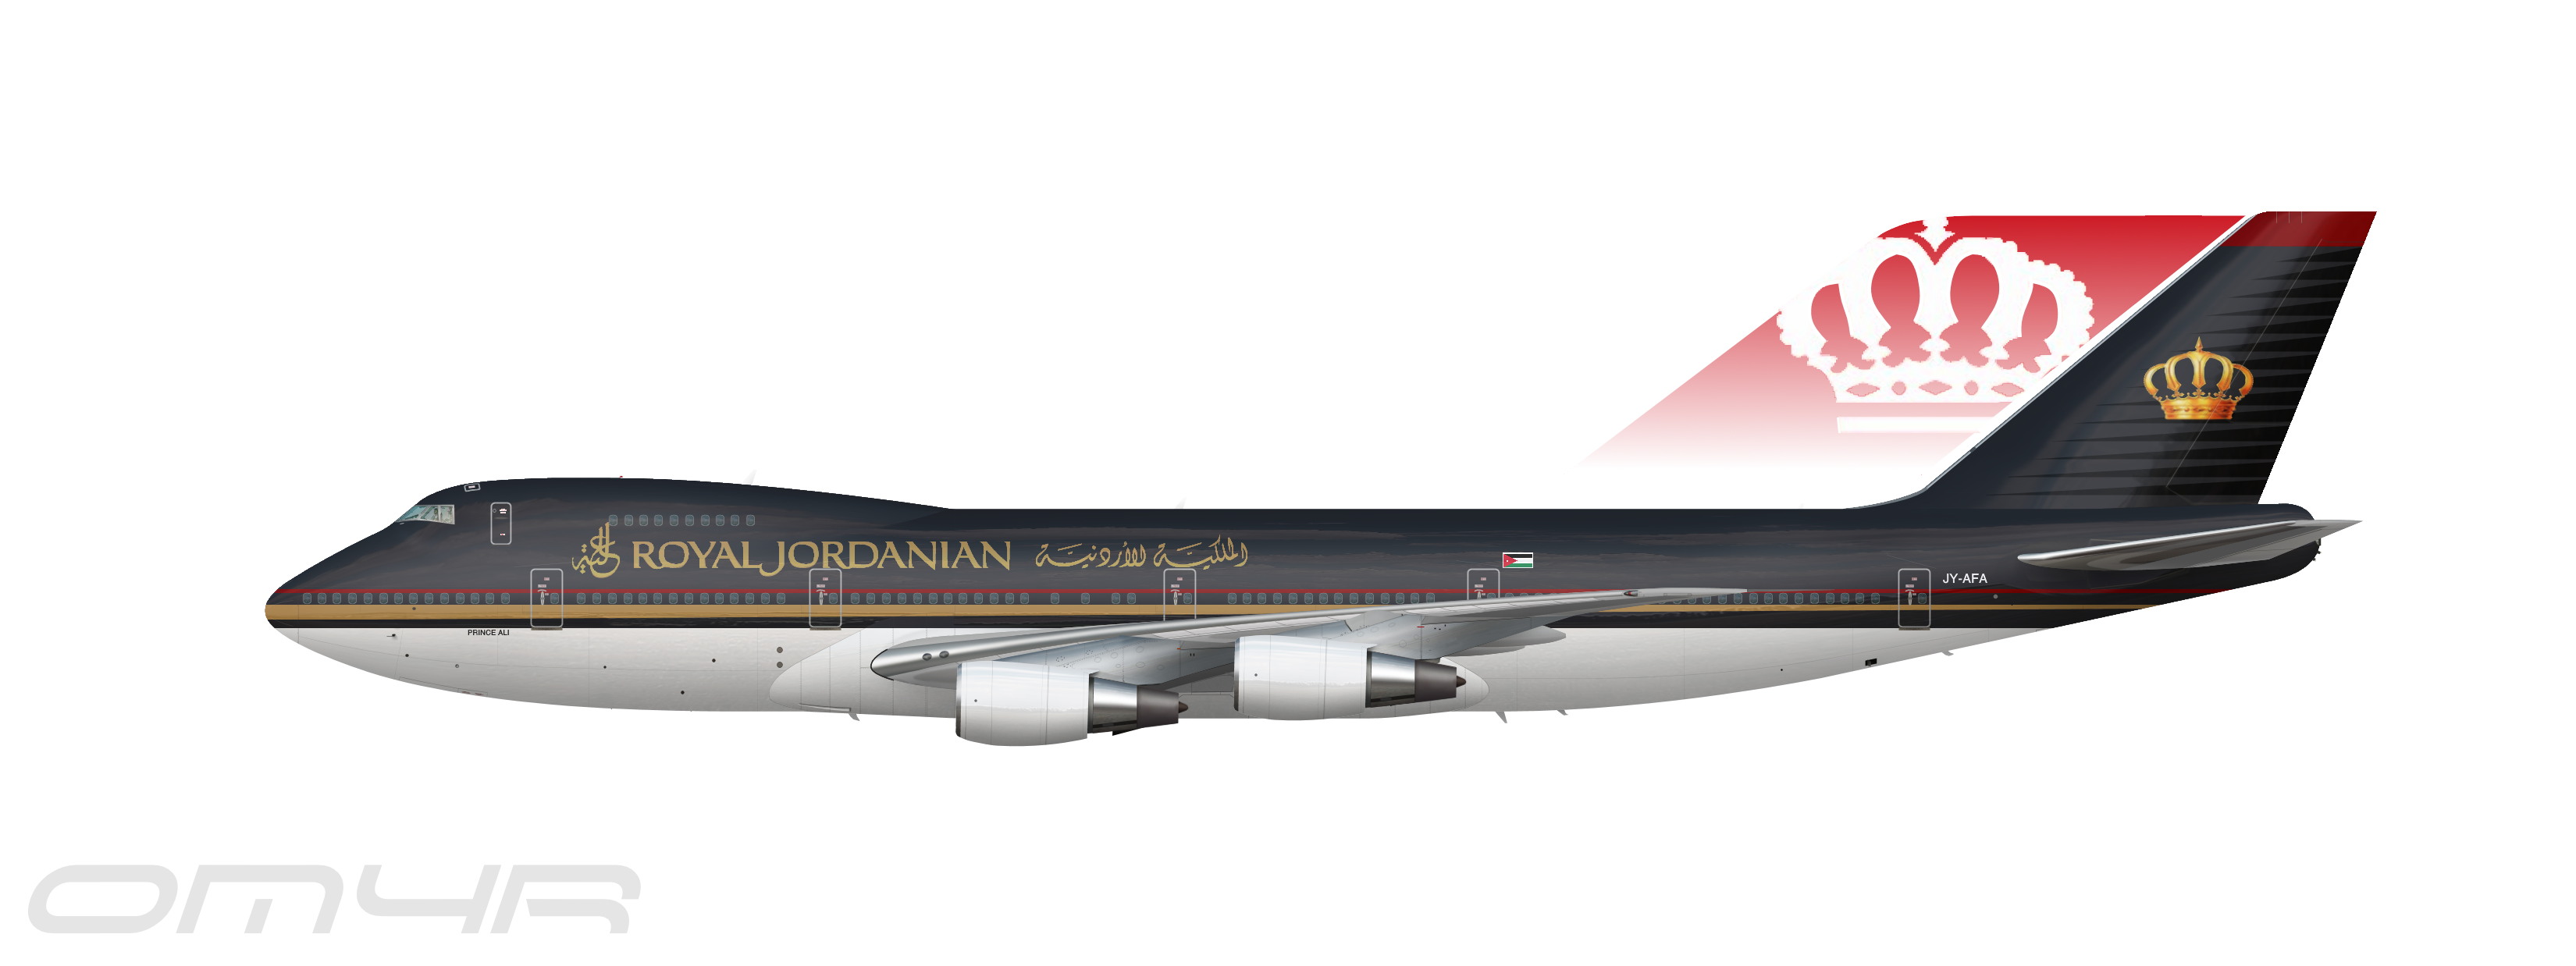 Royal Jordanian 747-2D3B - The Royal 